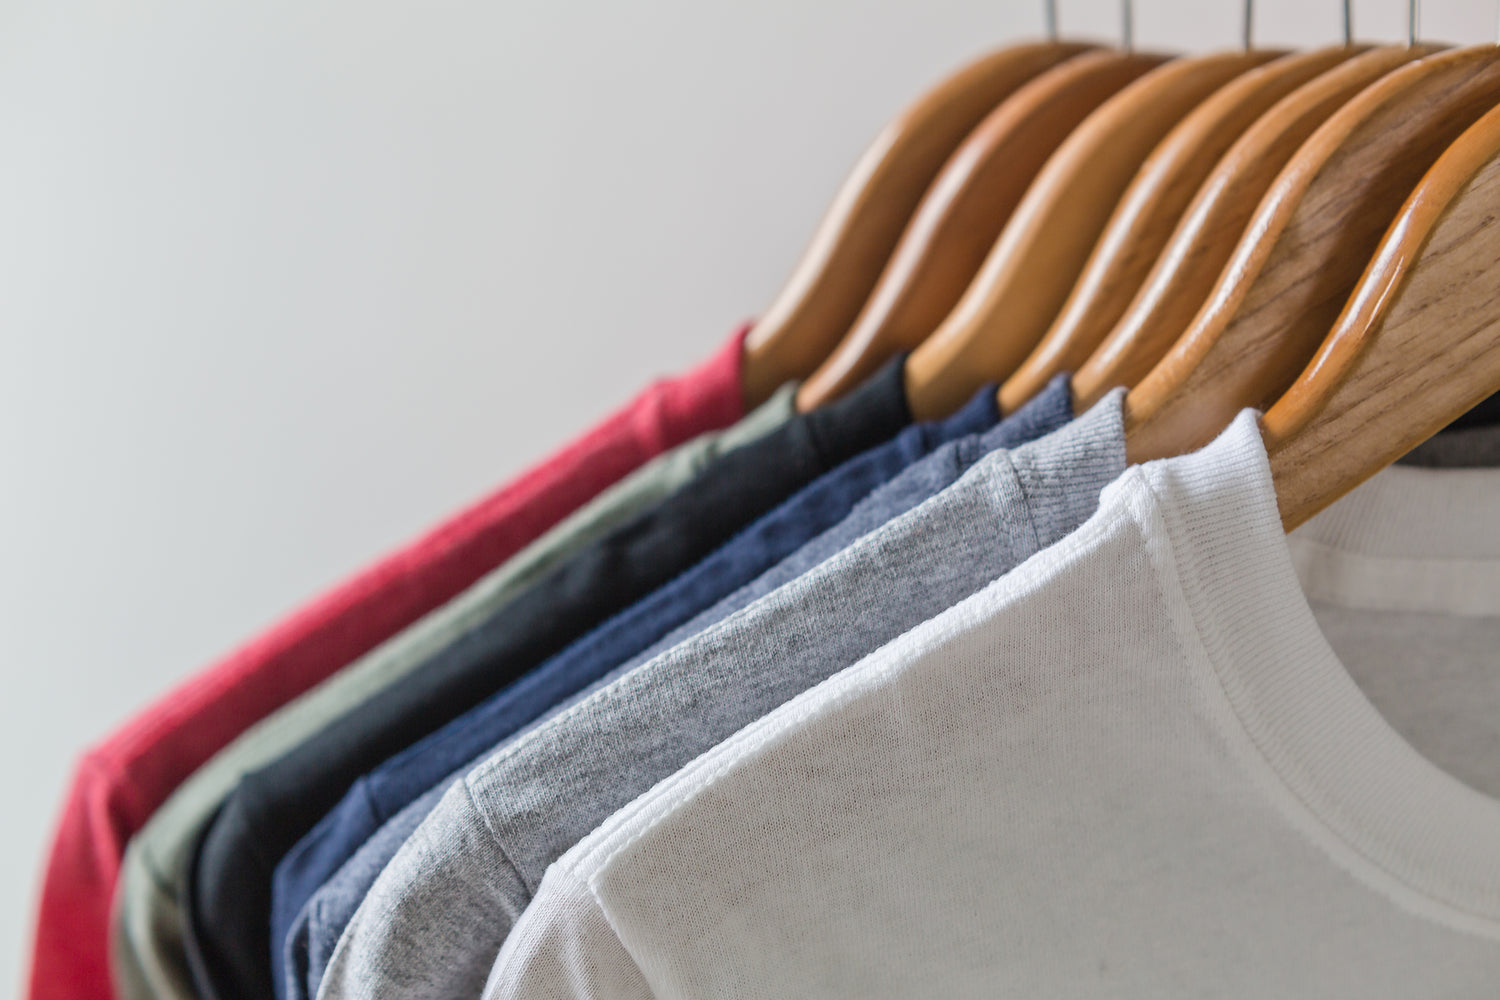 Row of shirts on hangers